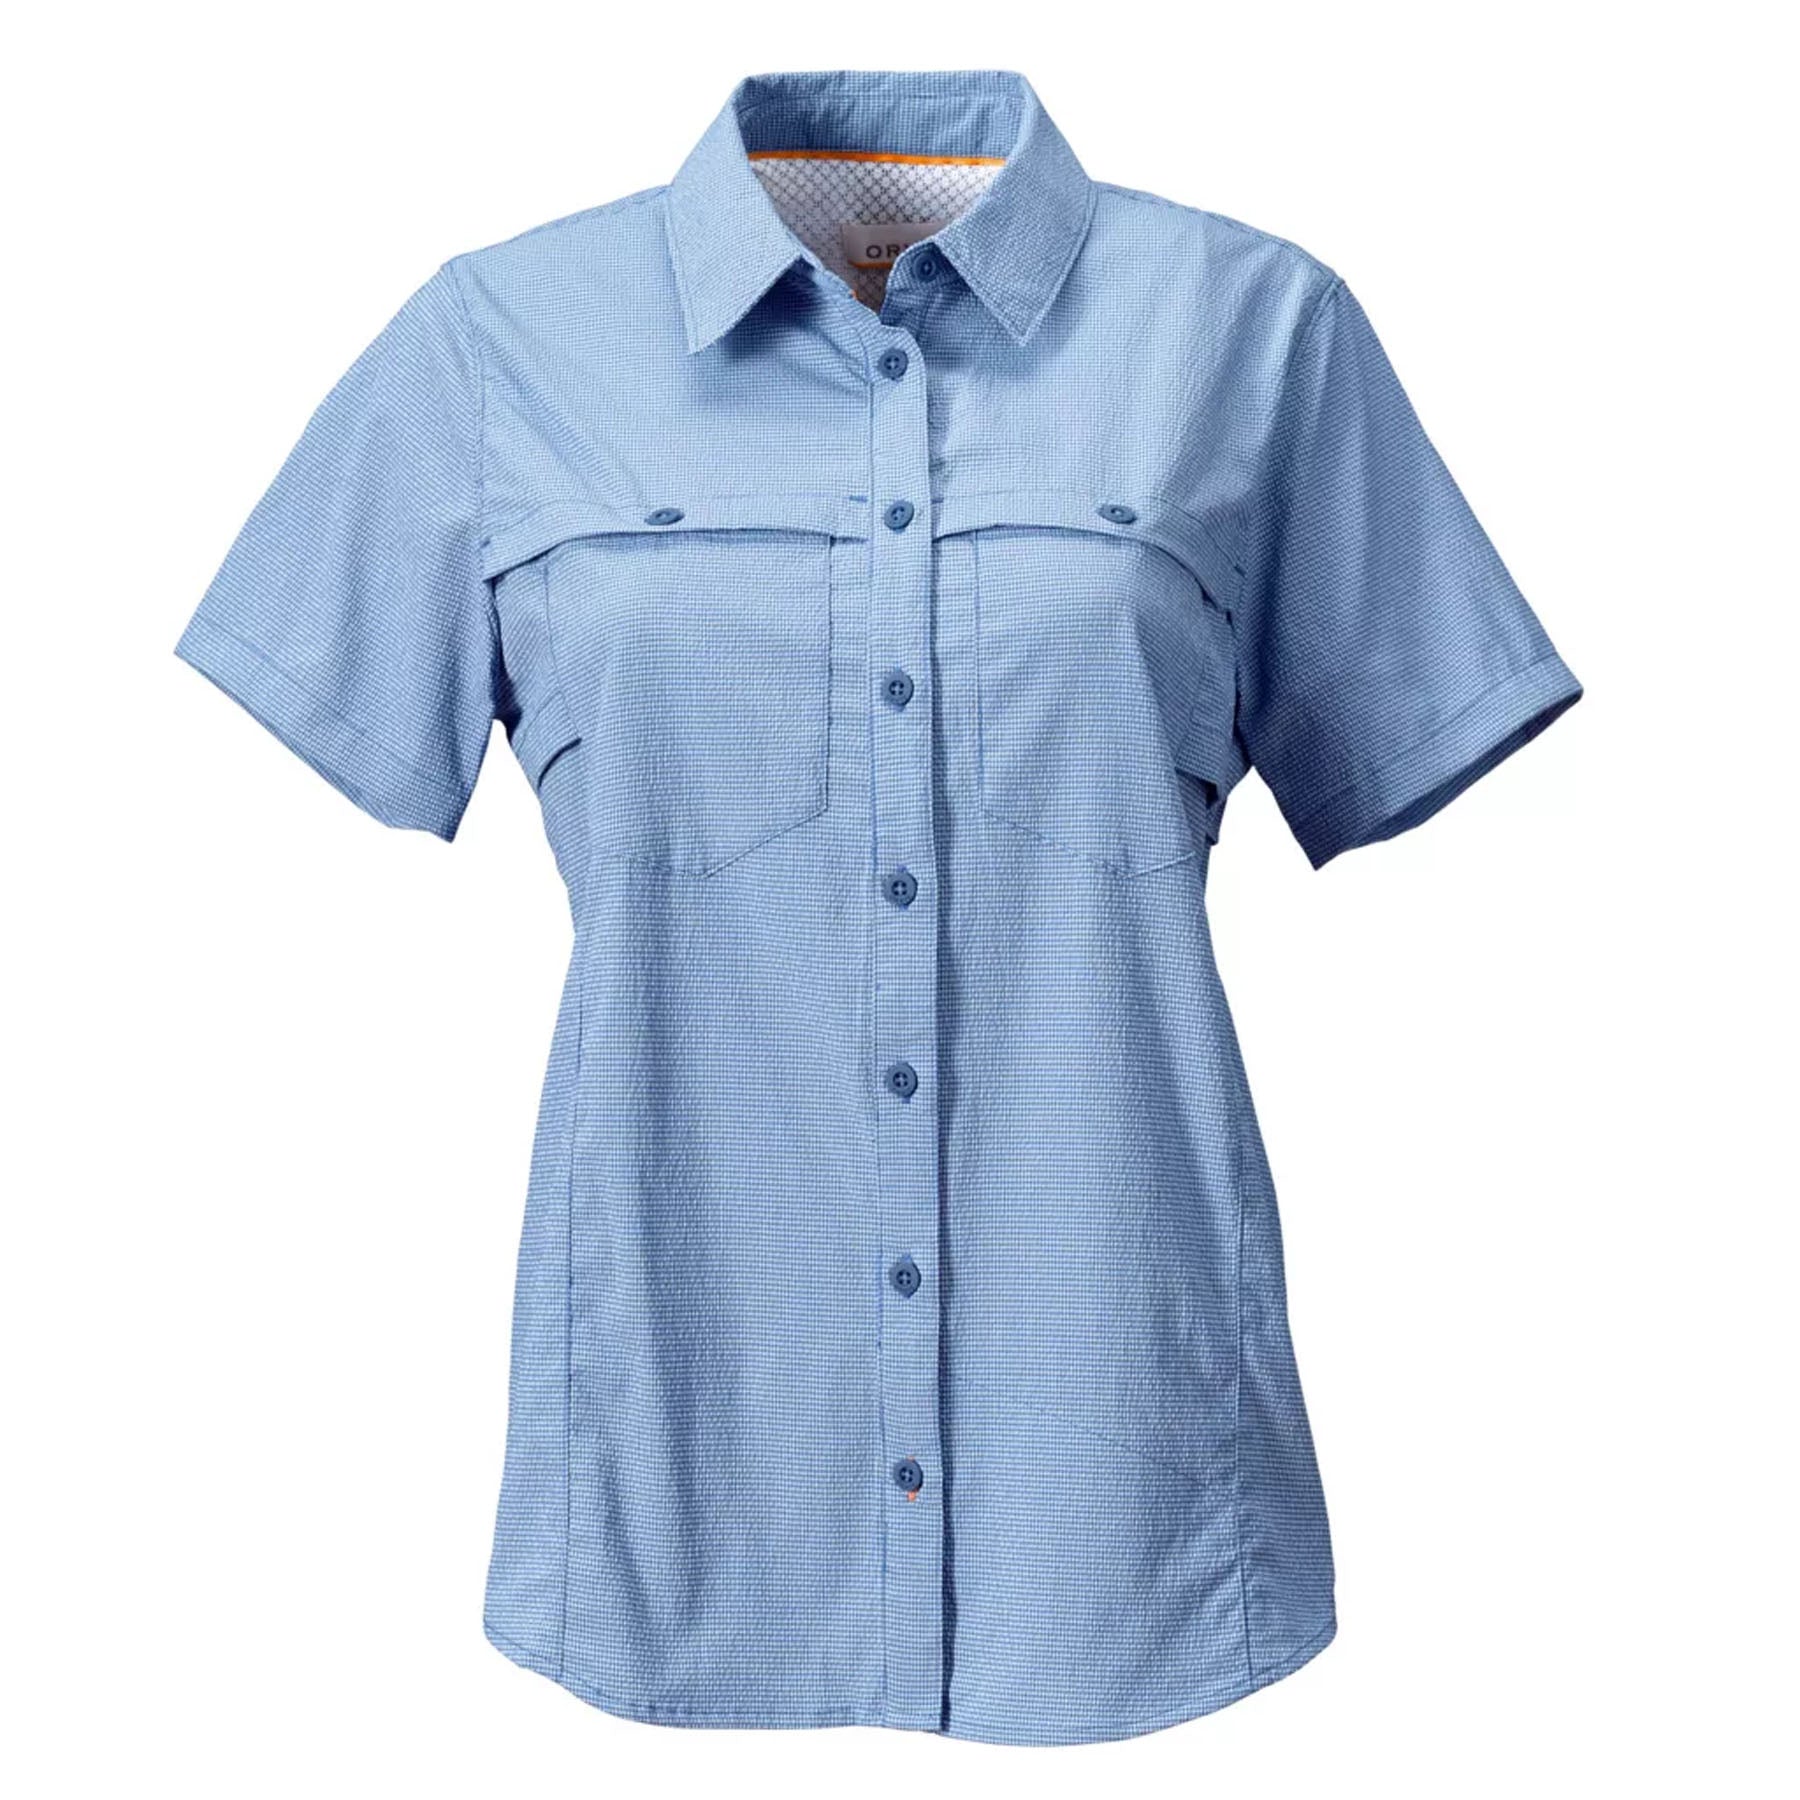 Orvis Open Air Caster Short-Sleeved Shirt - Women's Marineblue L